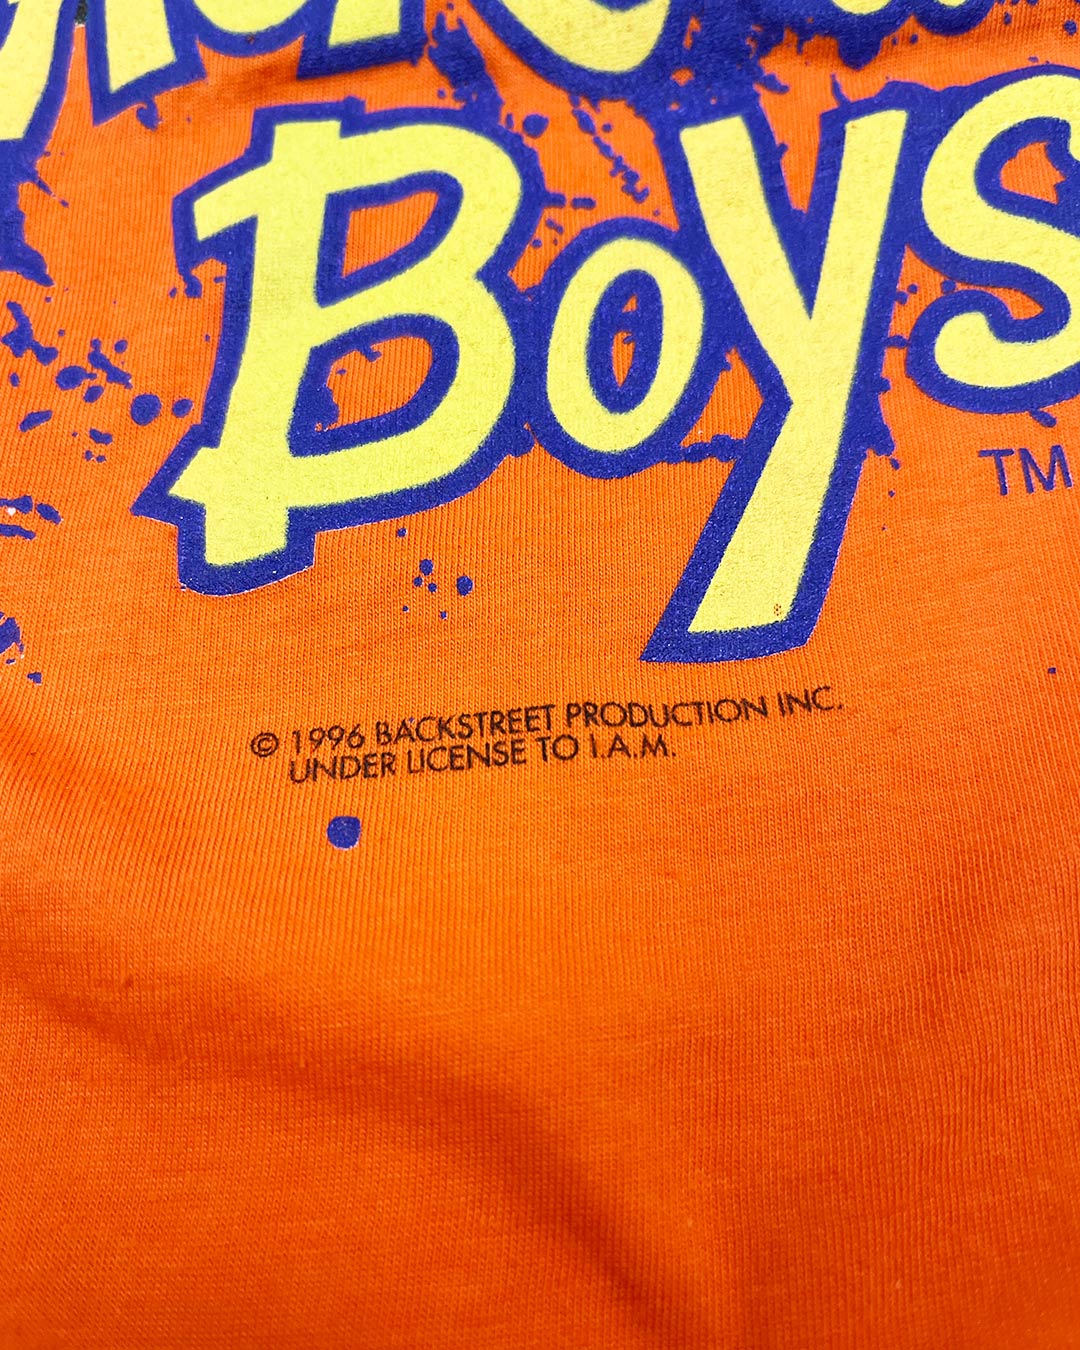 ORIGINAL BACKSTREET BOYS TOUR 1996 T-SHIRT